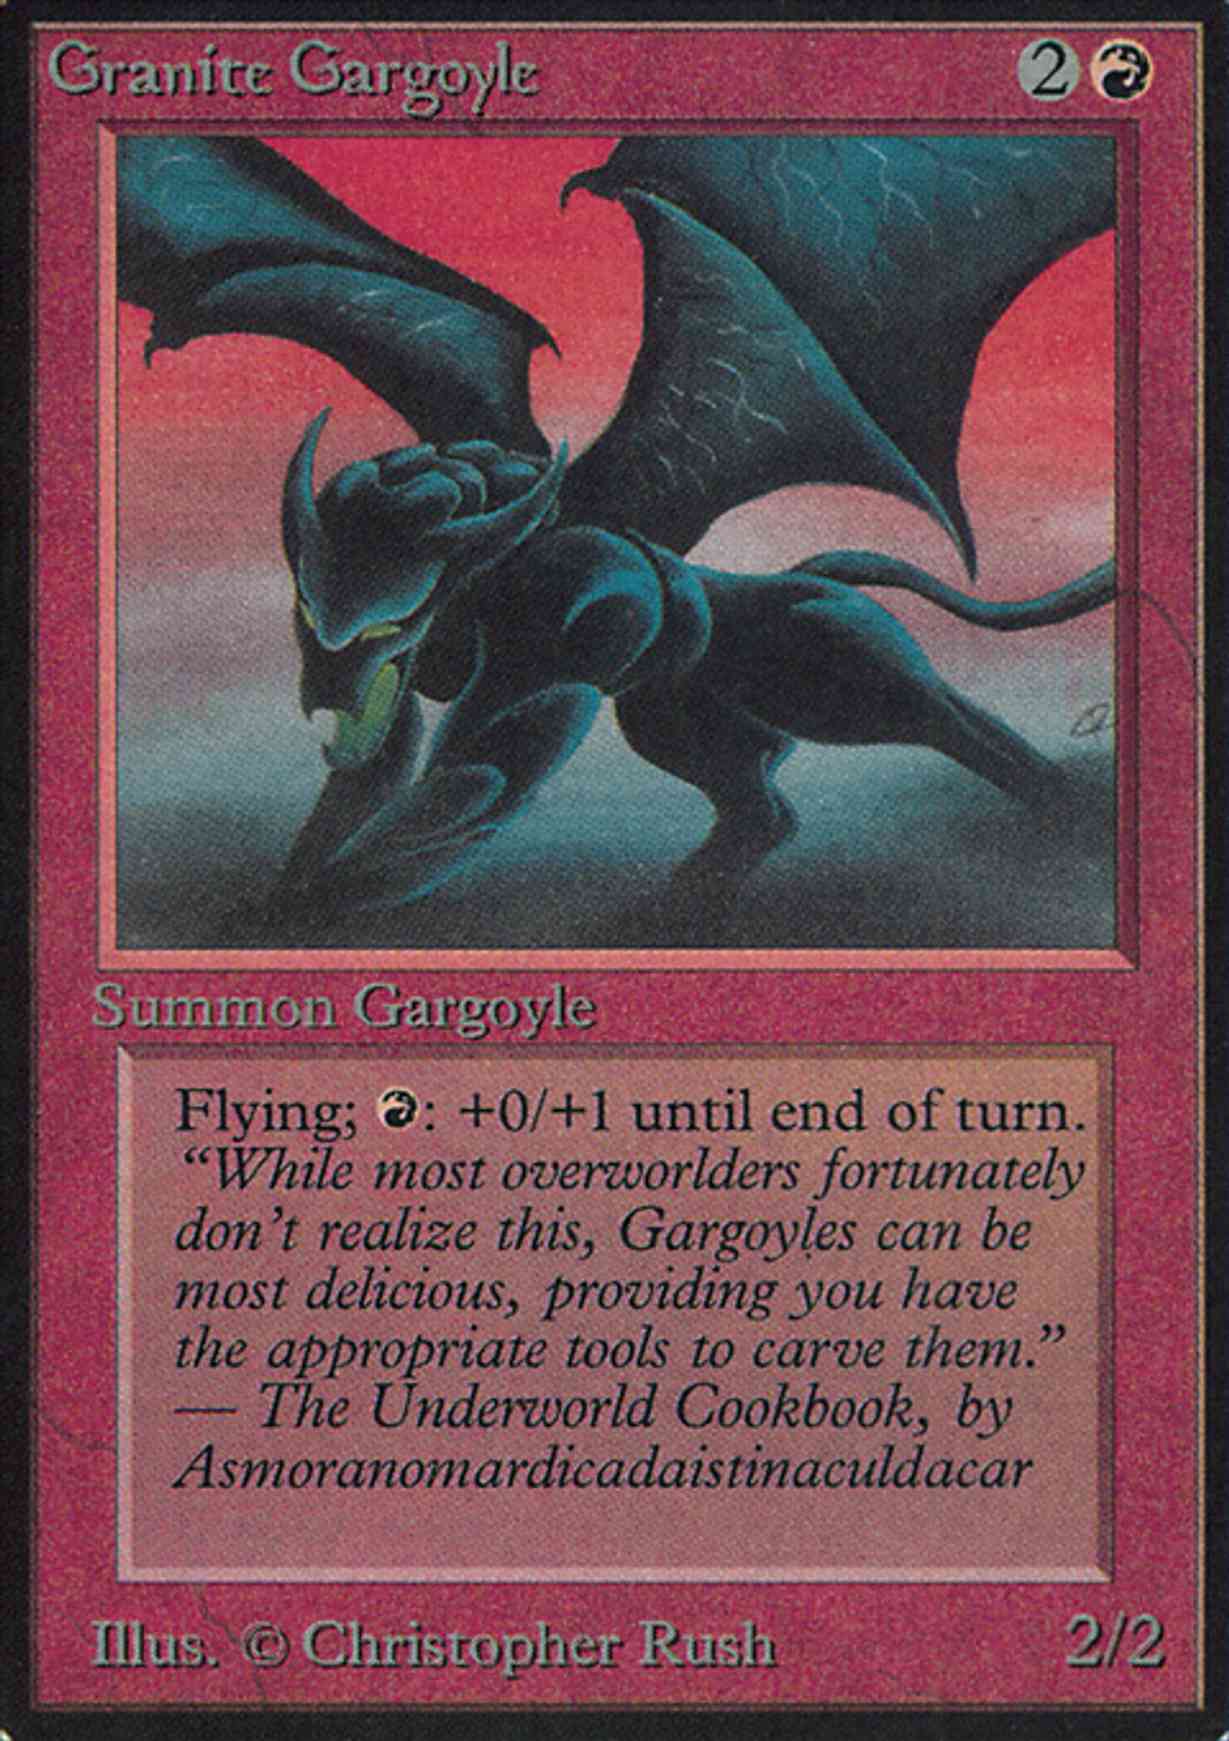 Granite Gargoyle magic card front